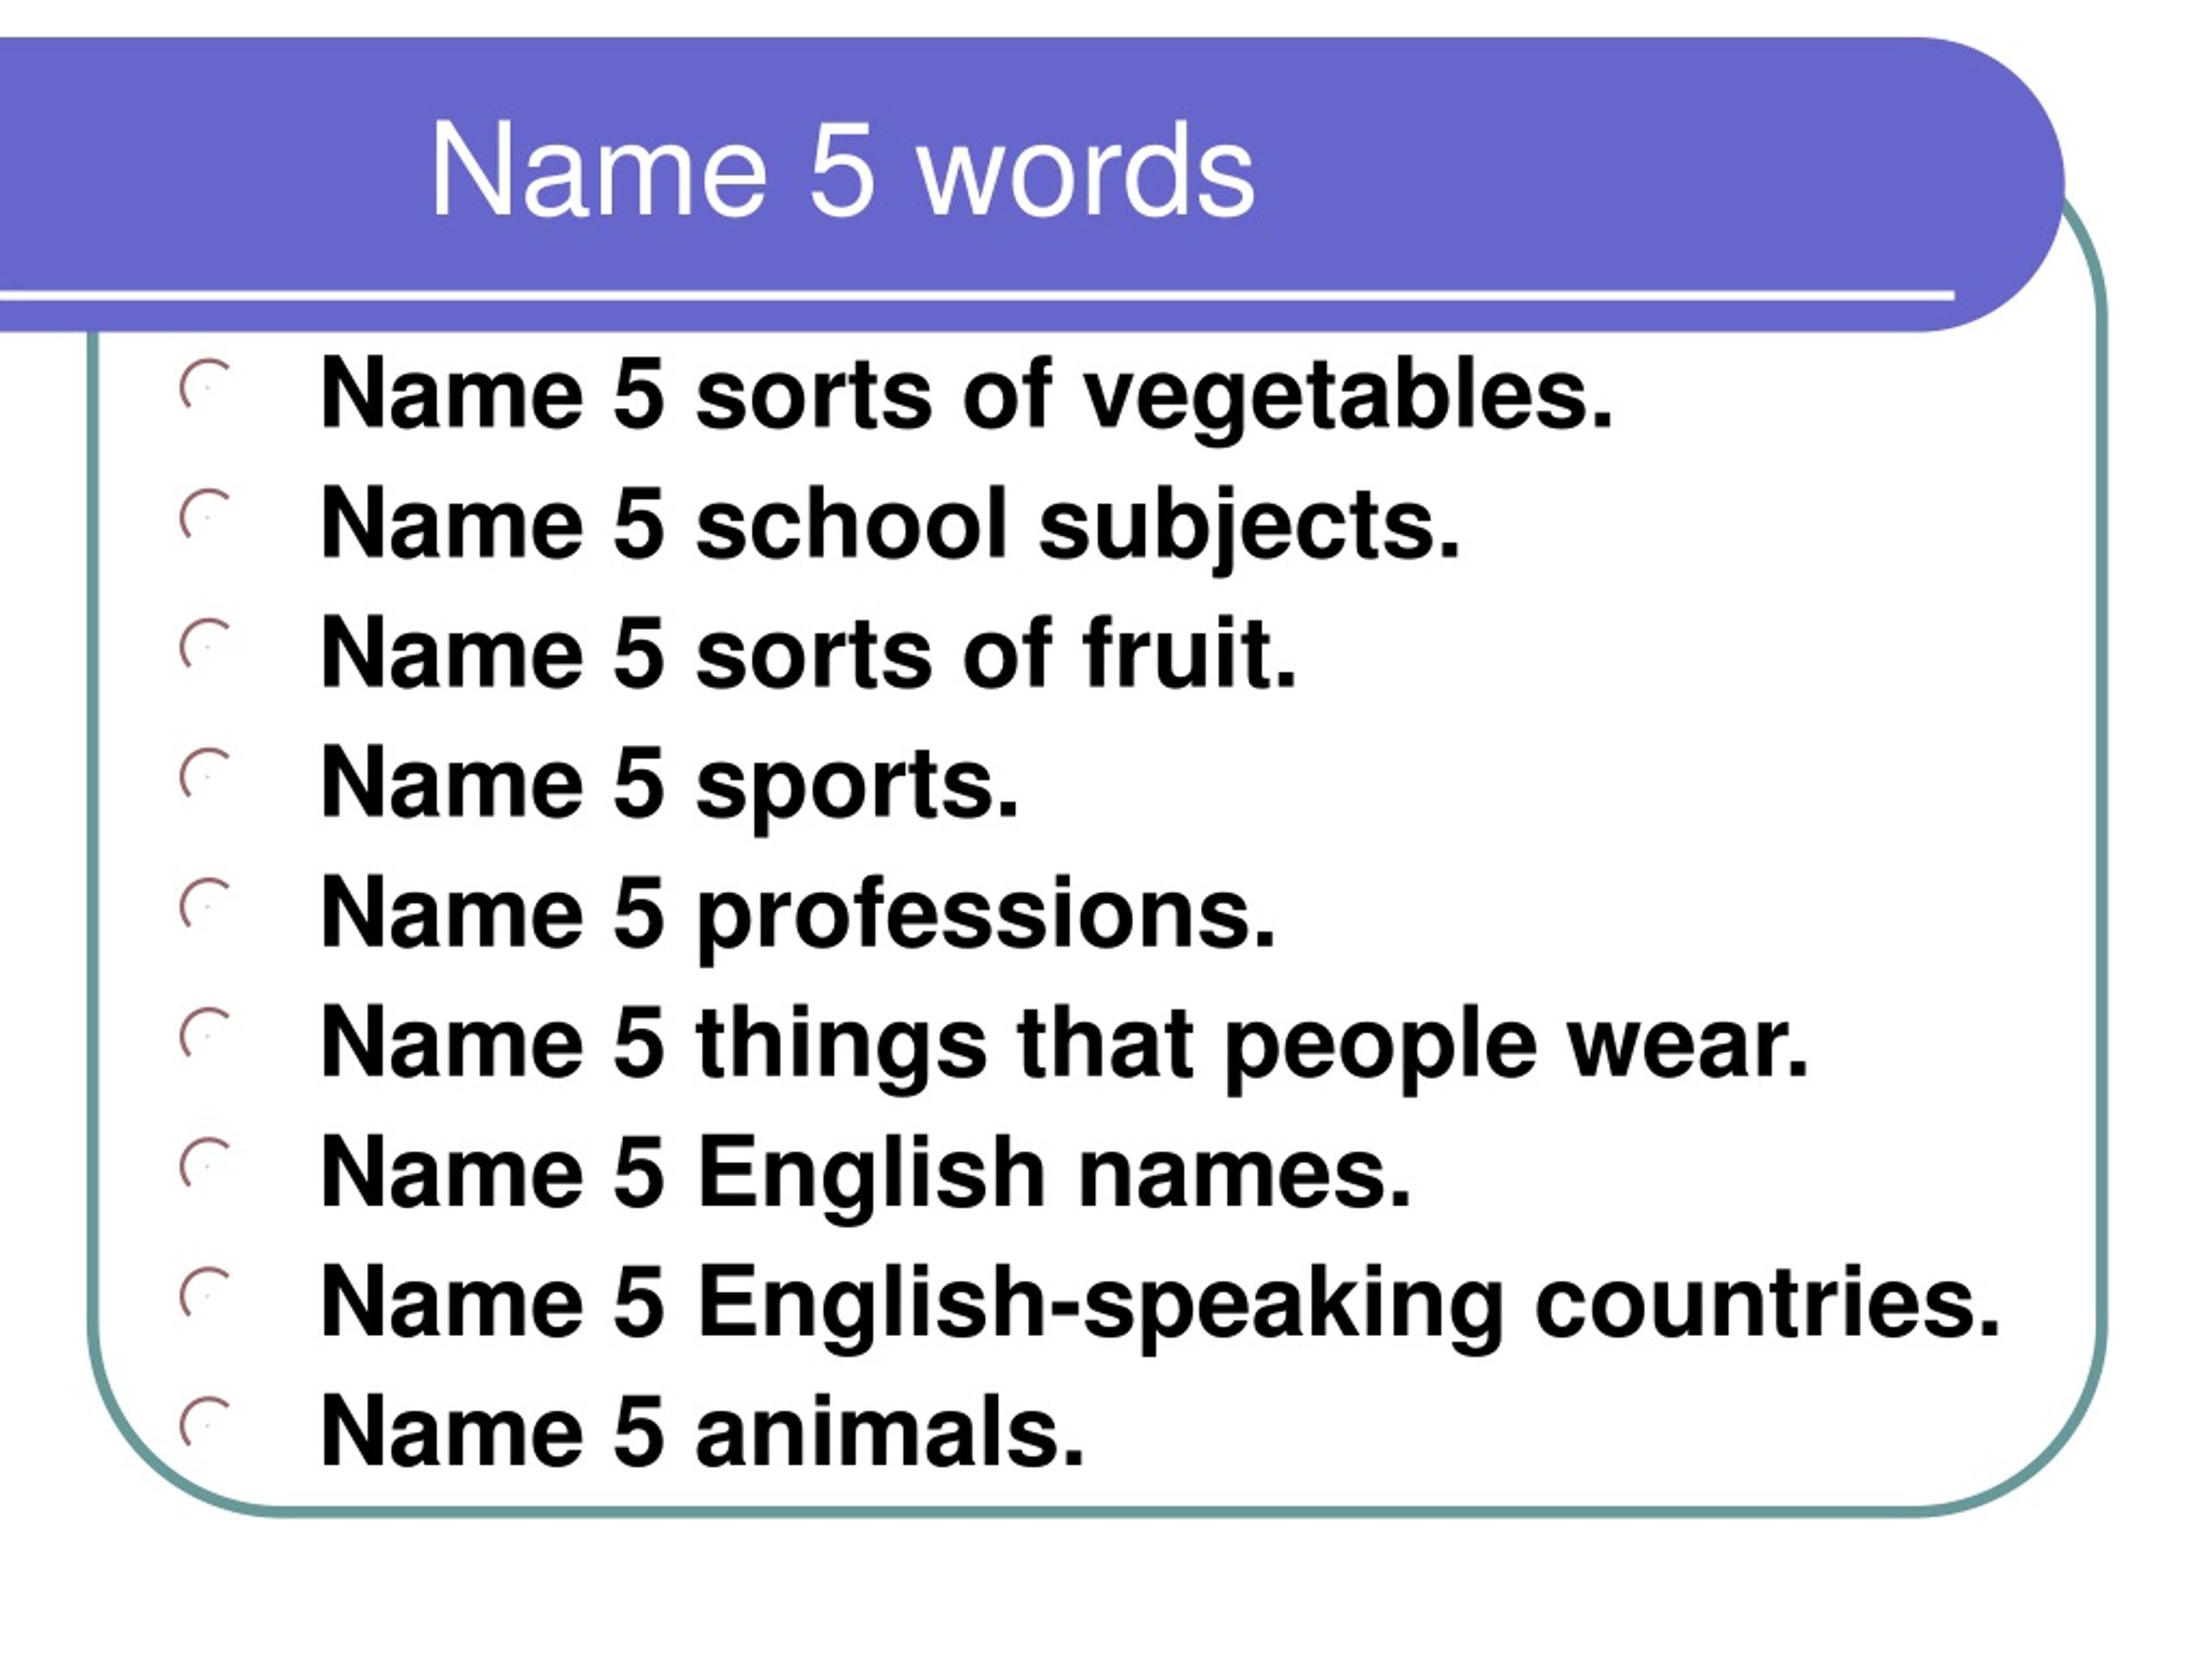 Name 5 sport. Warm up для урока английского языка. Warming up на уроке английского языка. Warming up activities на уроках английского языка. Name 5 things.